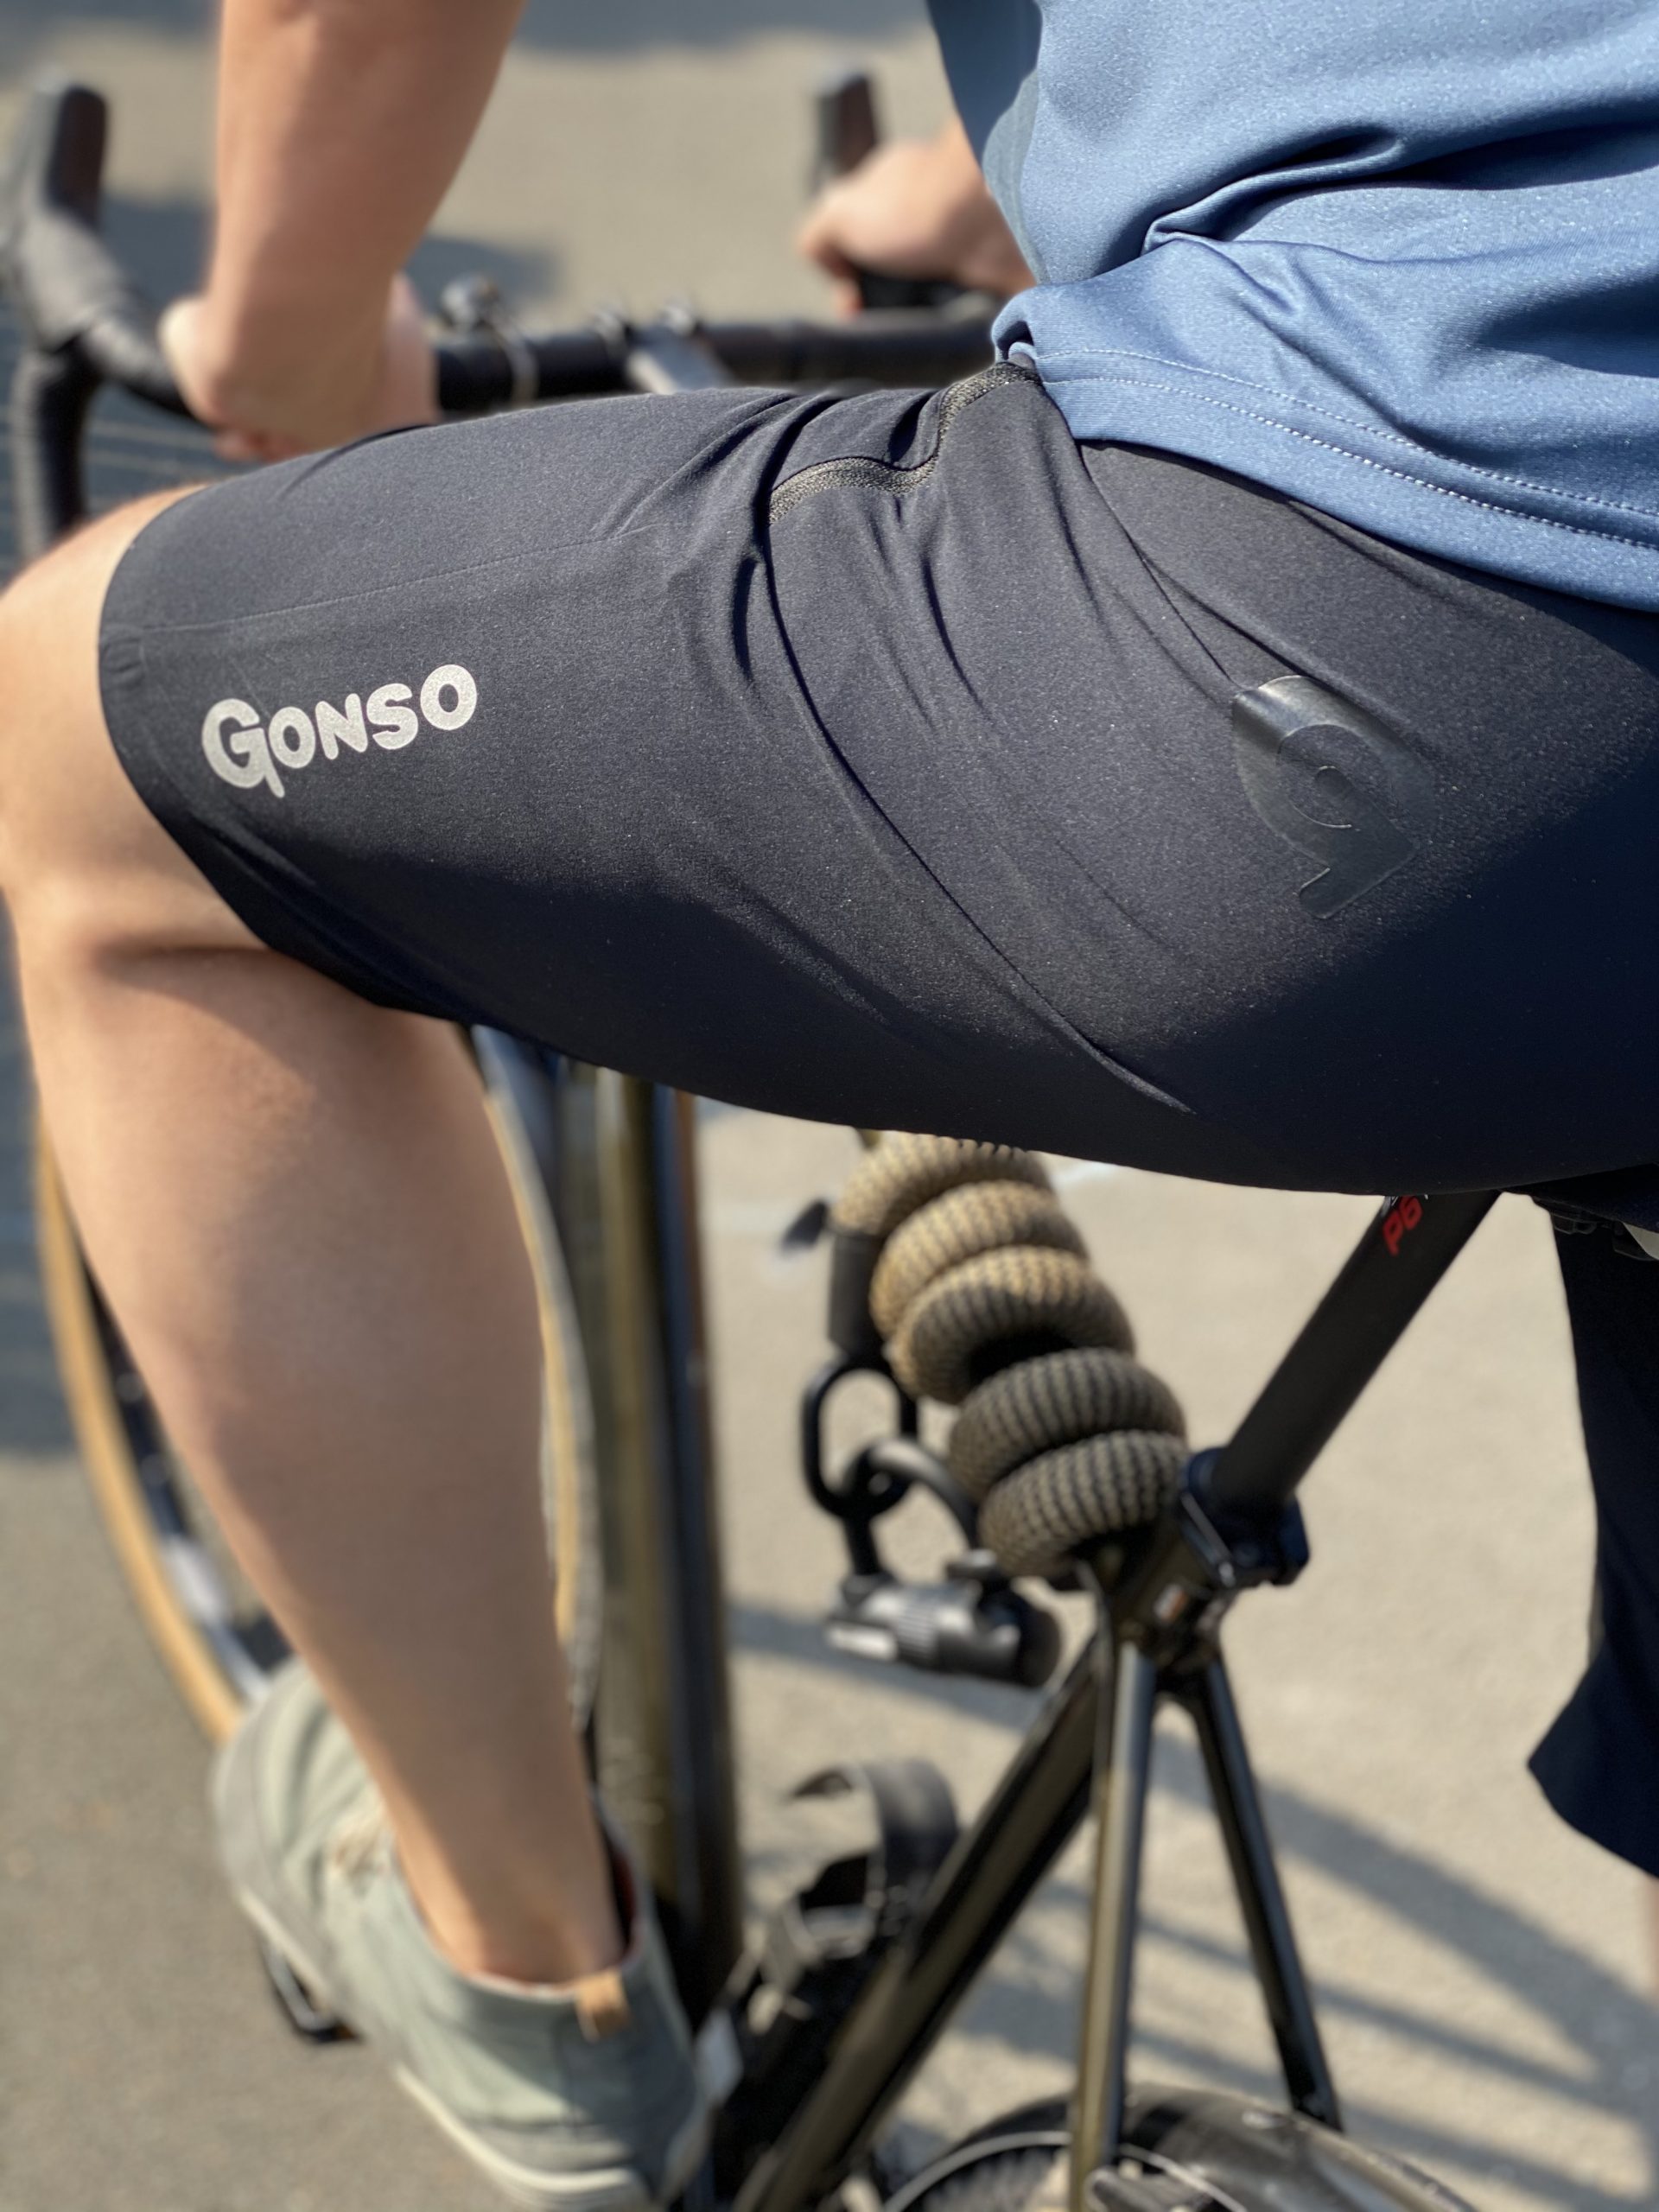 GONSO Sitivo Shorts im Test - Kurze Fahrradhose